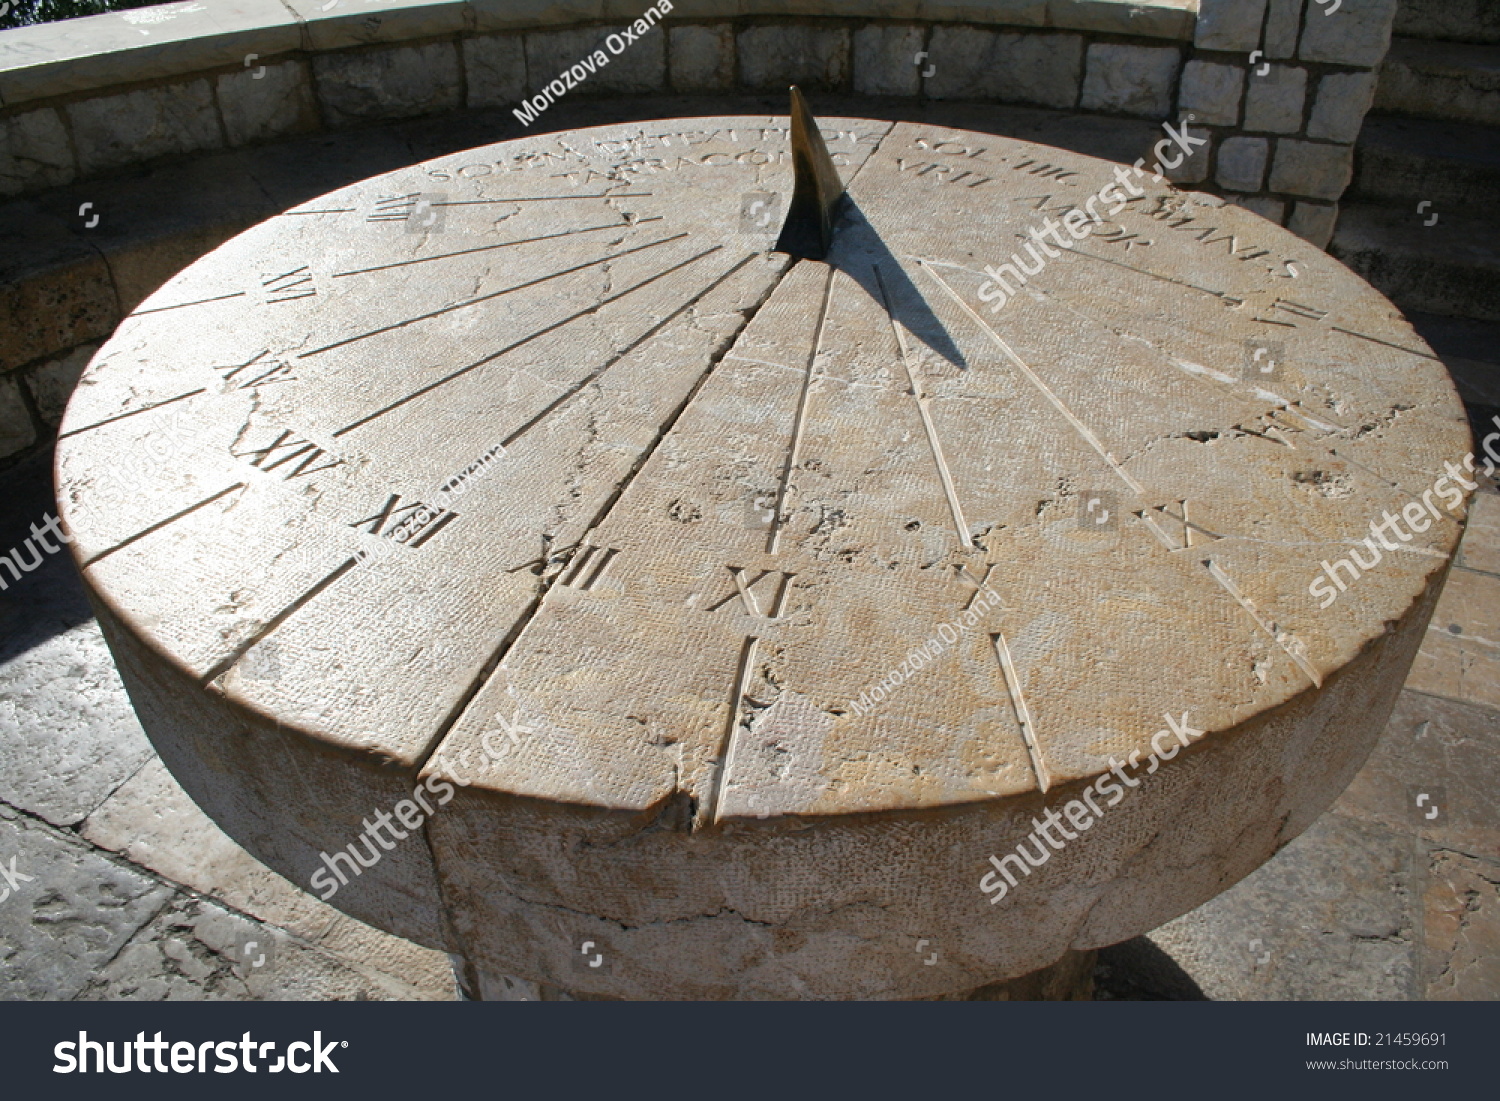 stock-photo-spain-tarragona-ancient-sundial-on-a-stone-platform-21459691.jpg